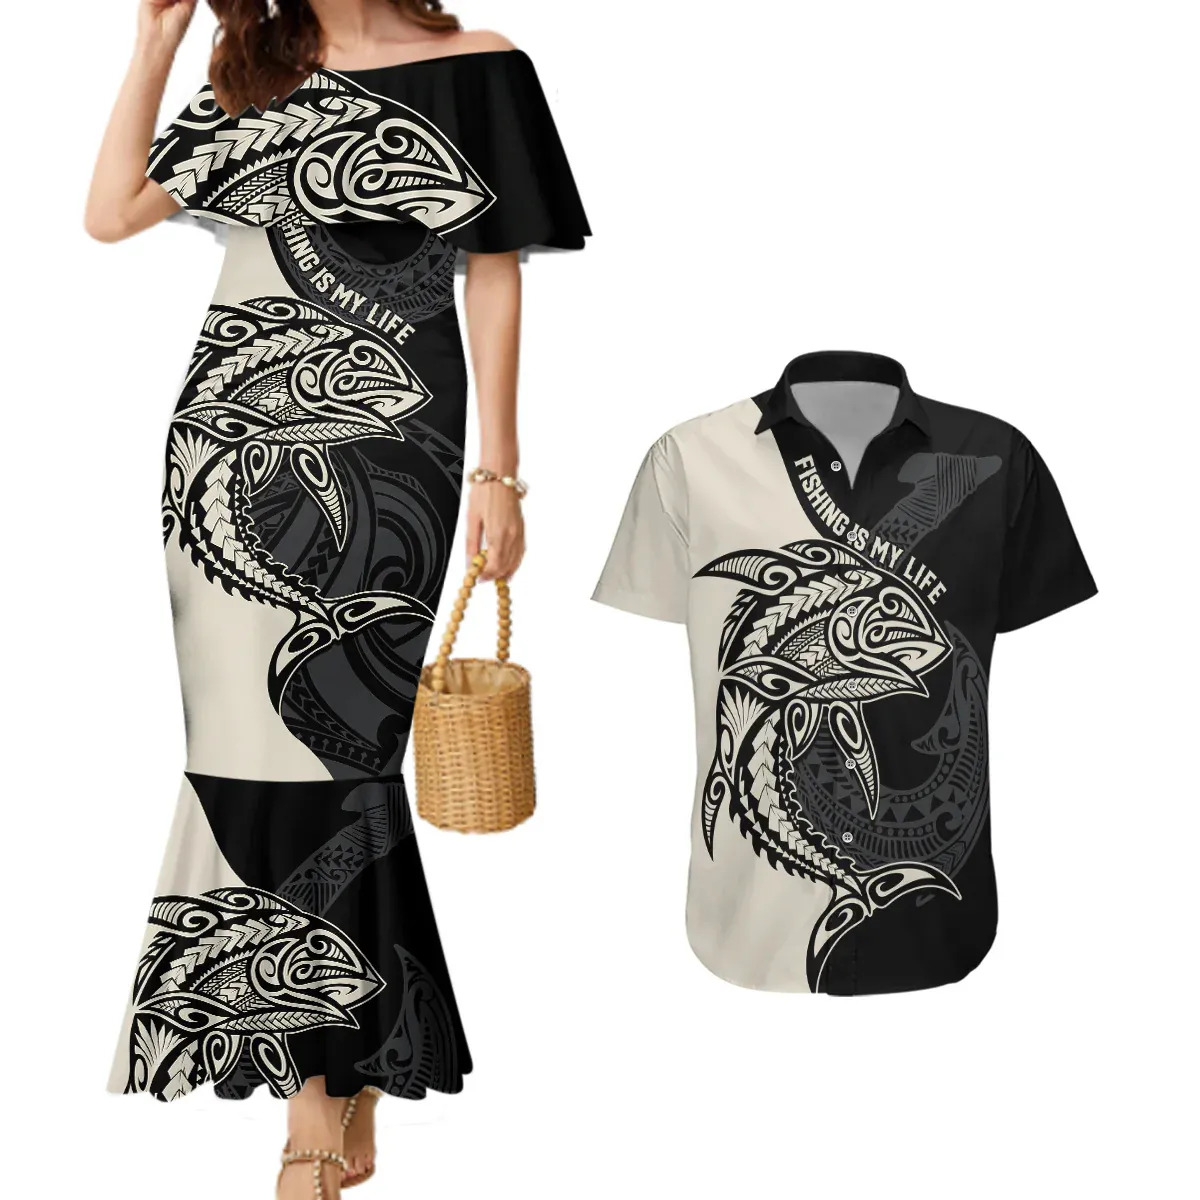 Camisa havaiana estampada personalizada e vestido de sereia combinado com roupa de casal de pescadores polinésia por atacado saia maxi de um ombro